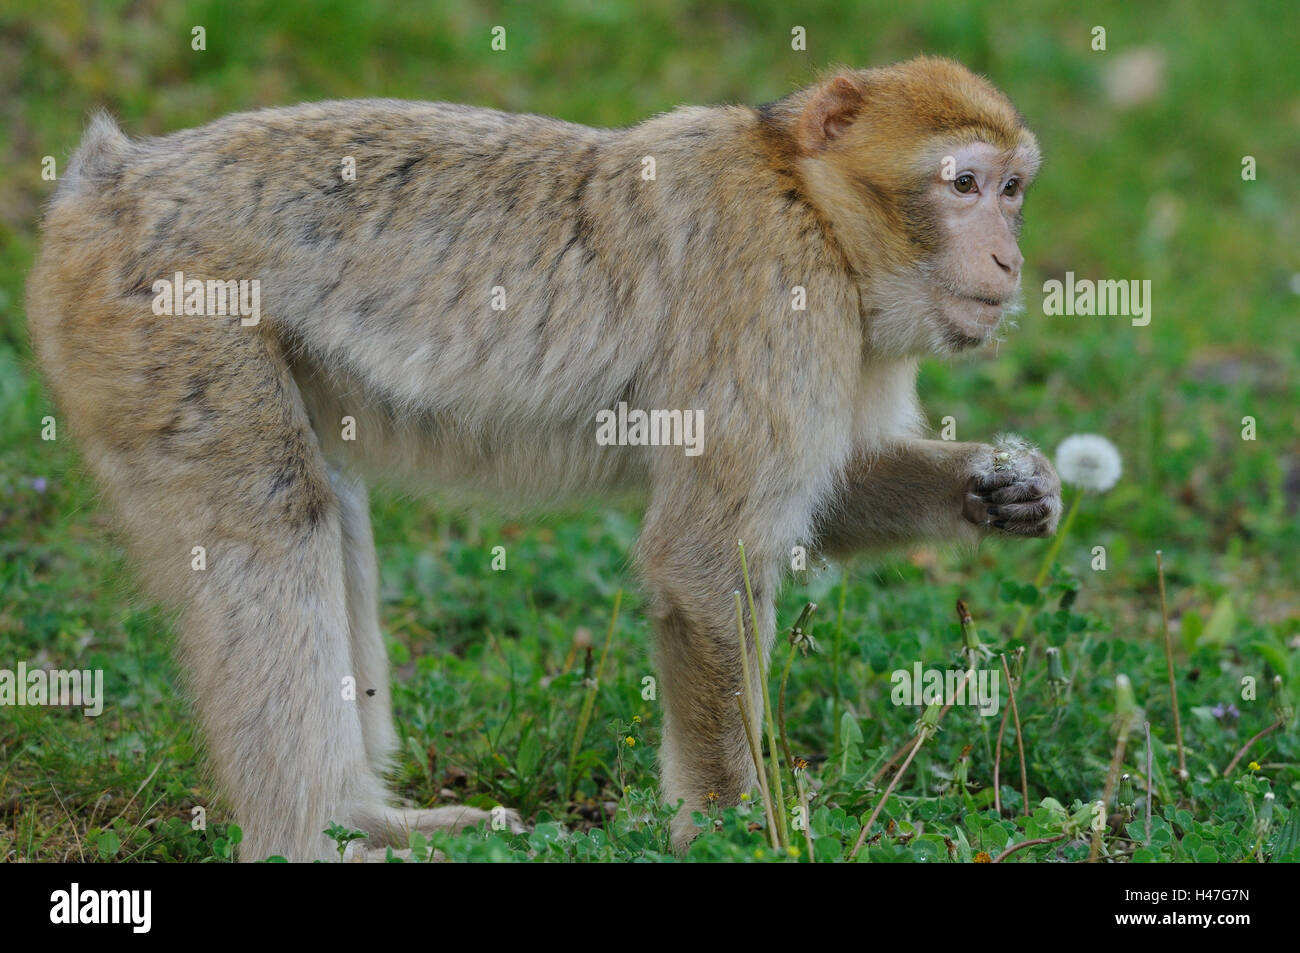 Mono del Bereber, Macaca sylvanus, pradera, vista lateral, stand, Jaramago, fadeds, comen, se centran en el primer plano, Foto de stock